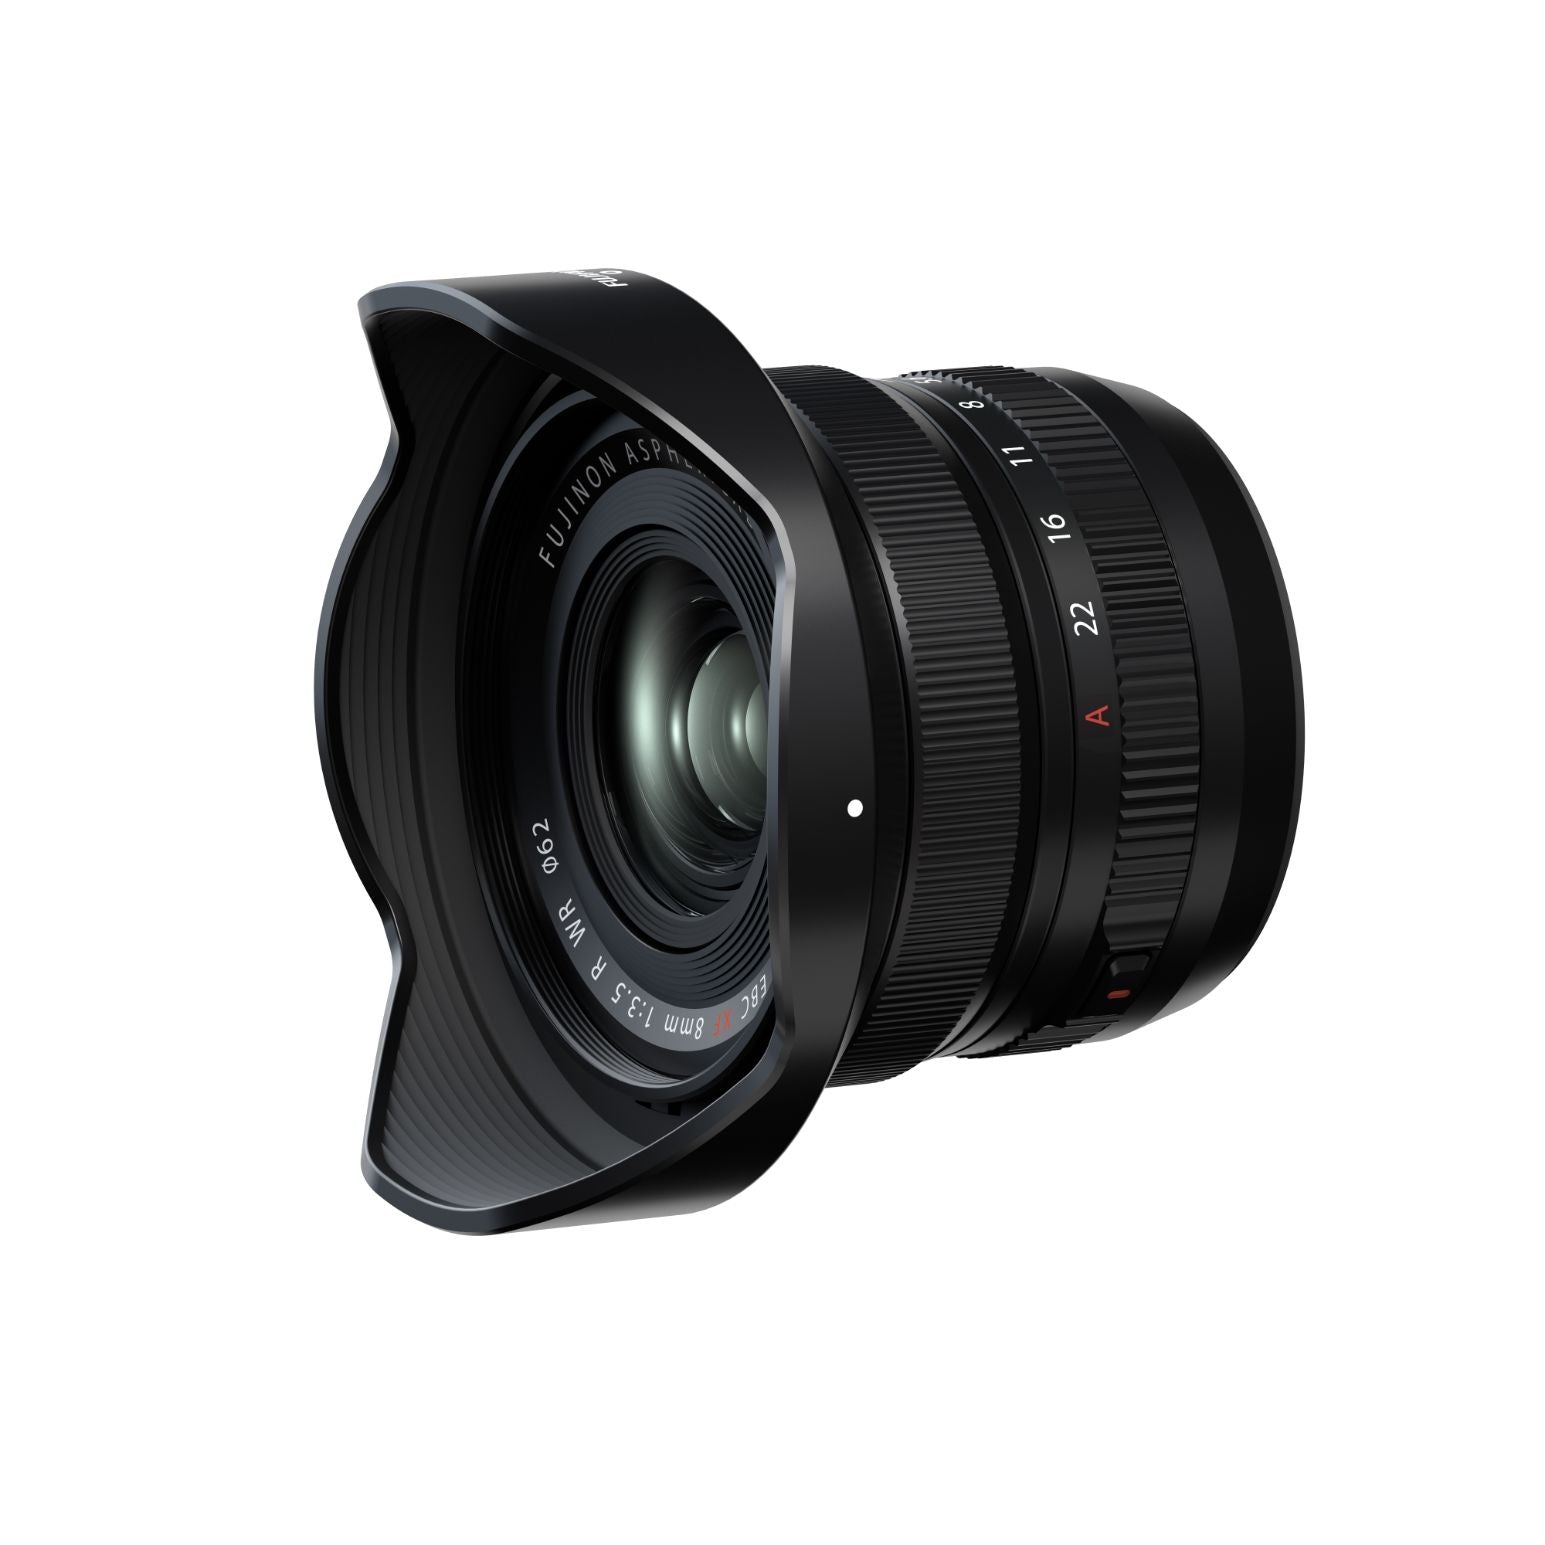 Fujifilm XF 8mm F3.5 R WR lens